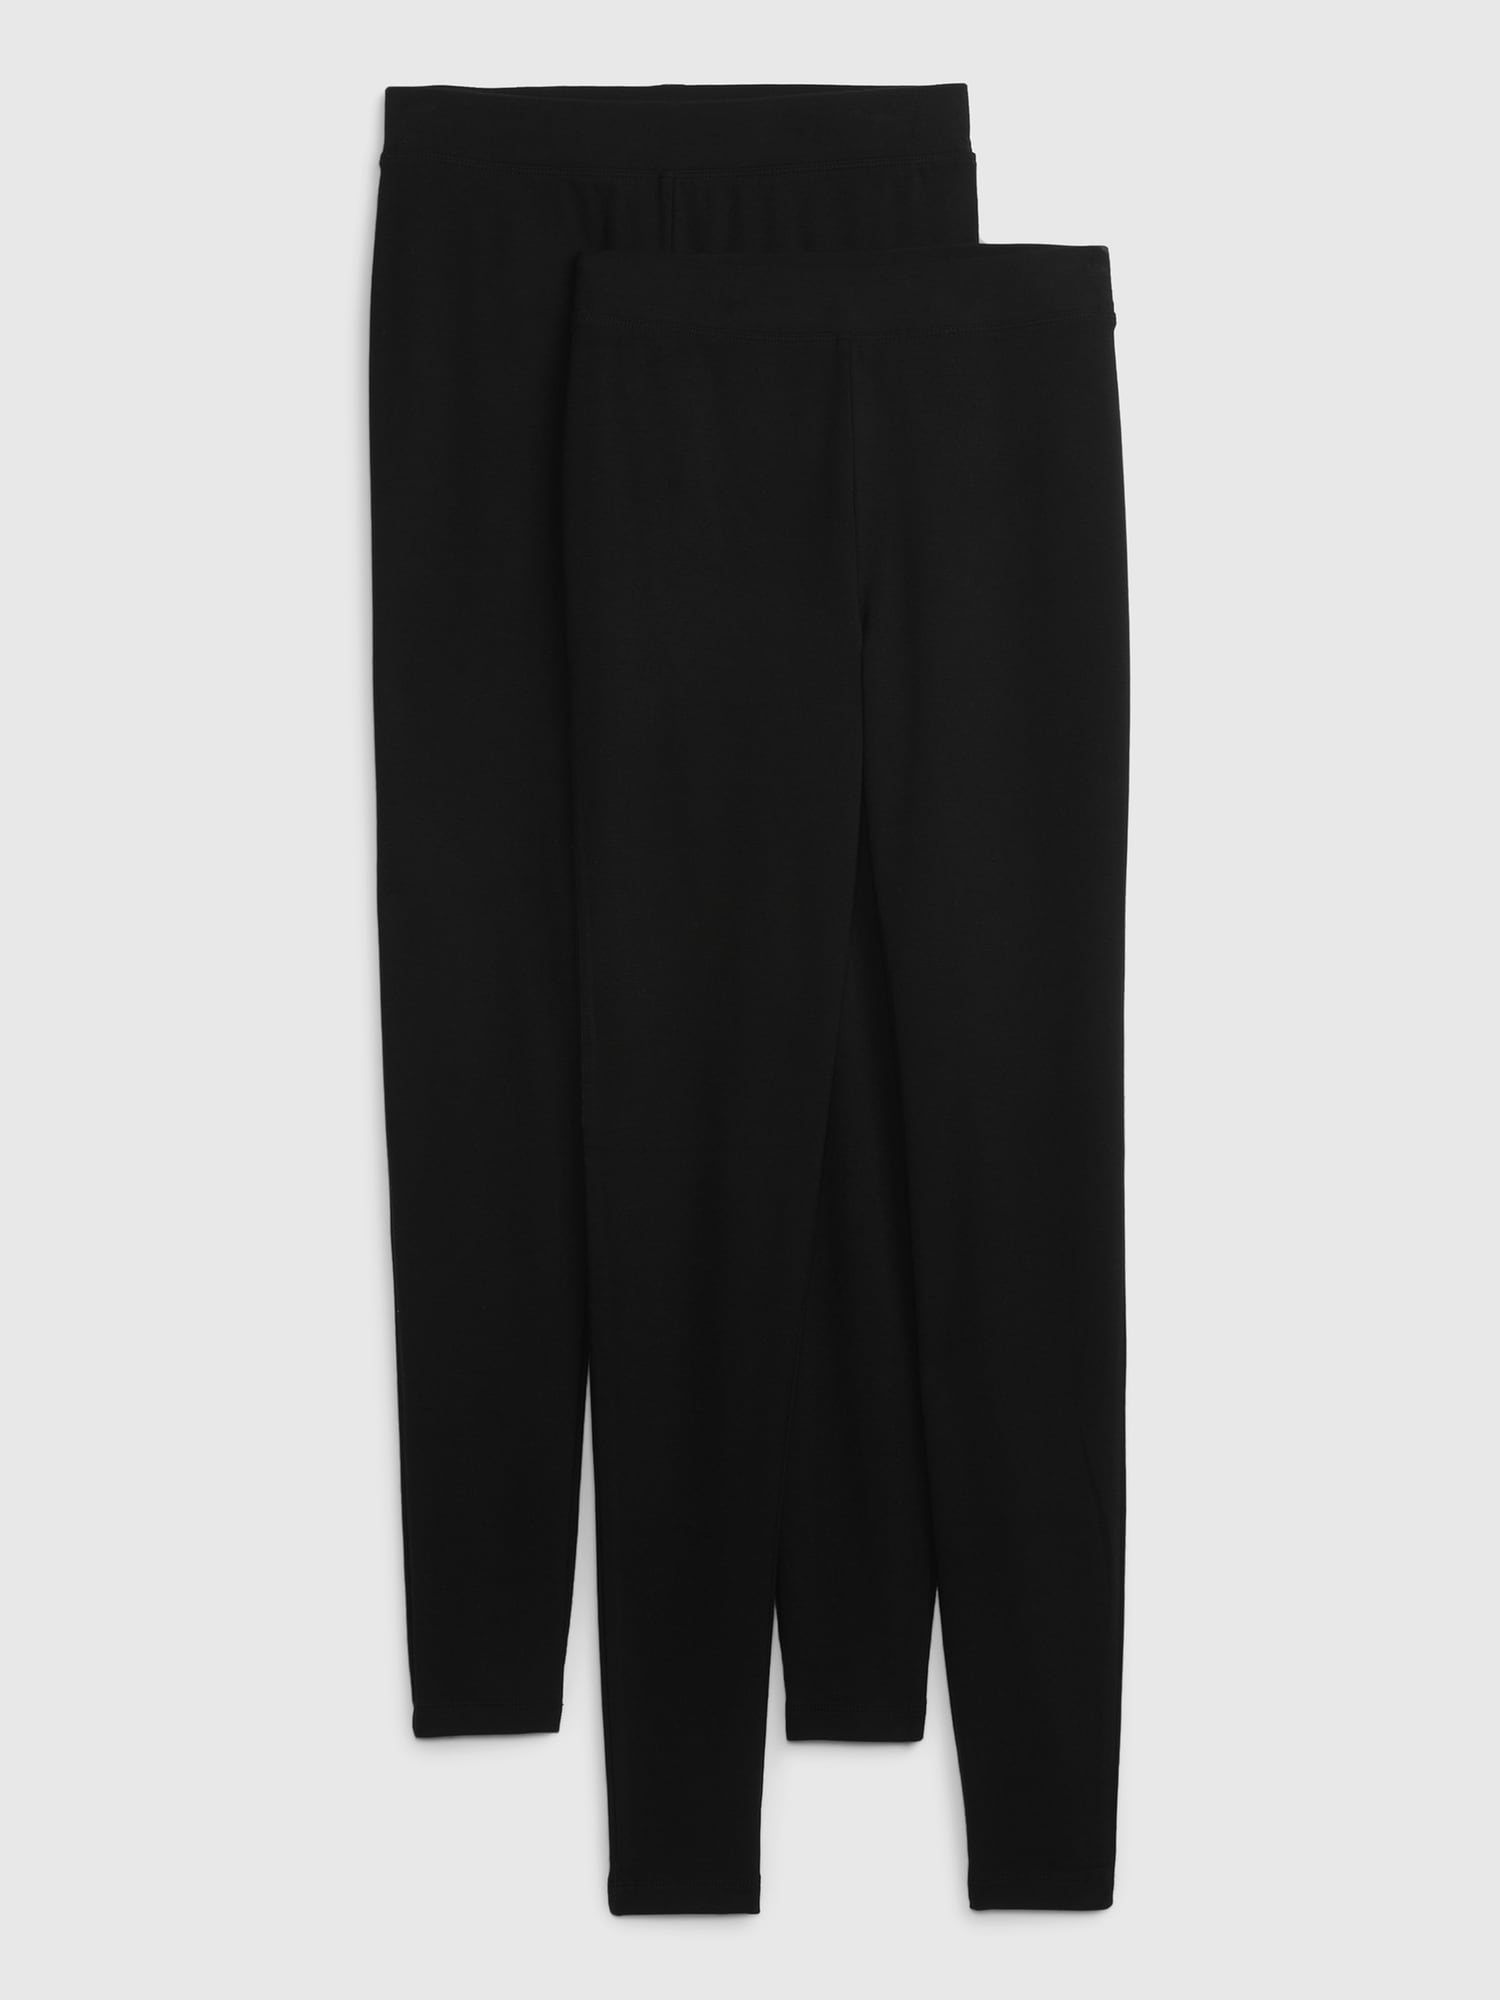 ORIGINAL BASICS Women's 1/2 Short Cotton Leggings (1-3 Pack) - Black - 3/5  : : Fashion